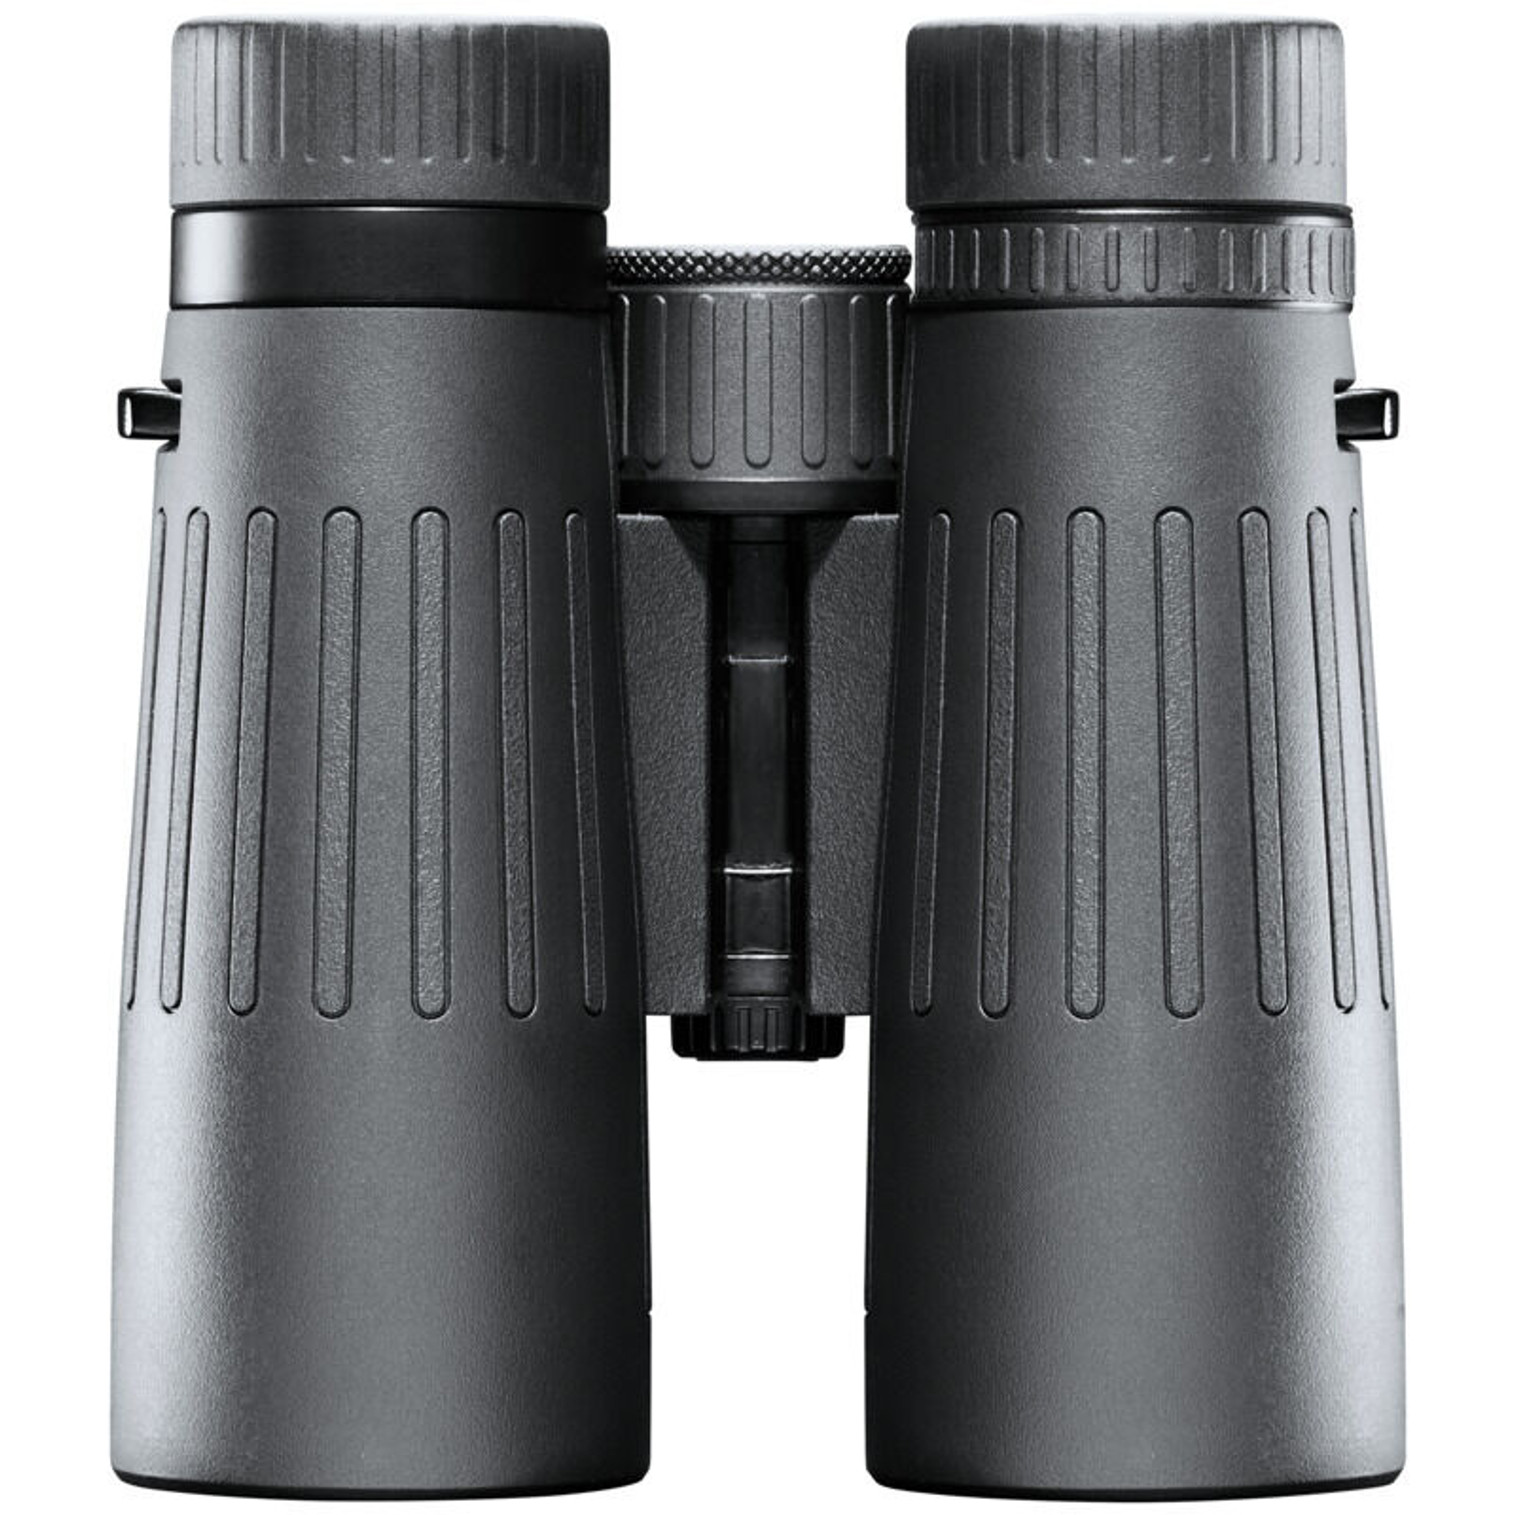 Powerview 2 8X42Mm Binoculars